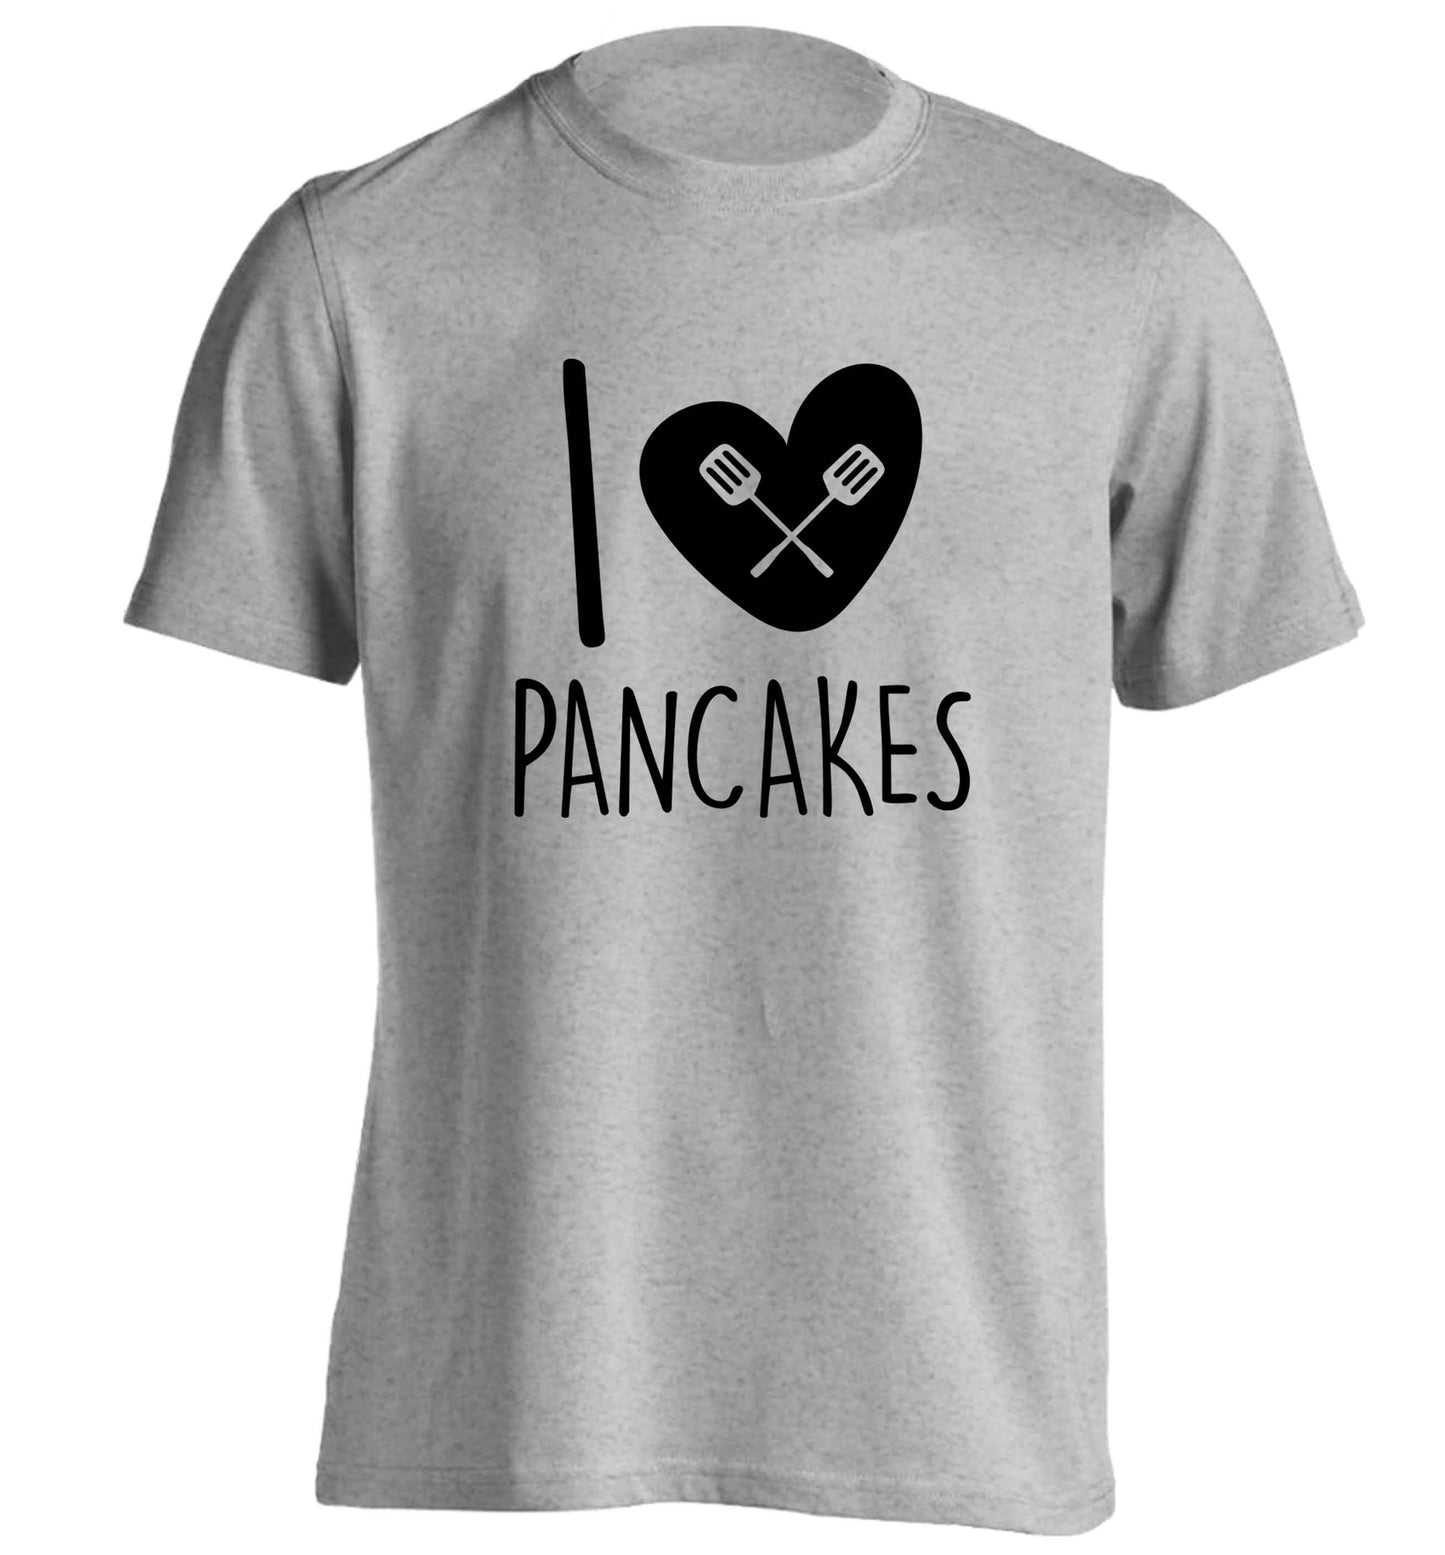 I love pancakes adults unisex grey Tshirt 2XL